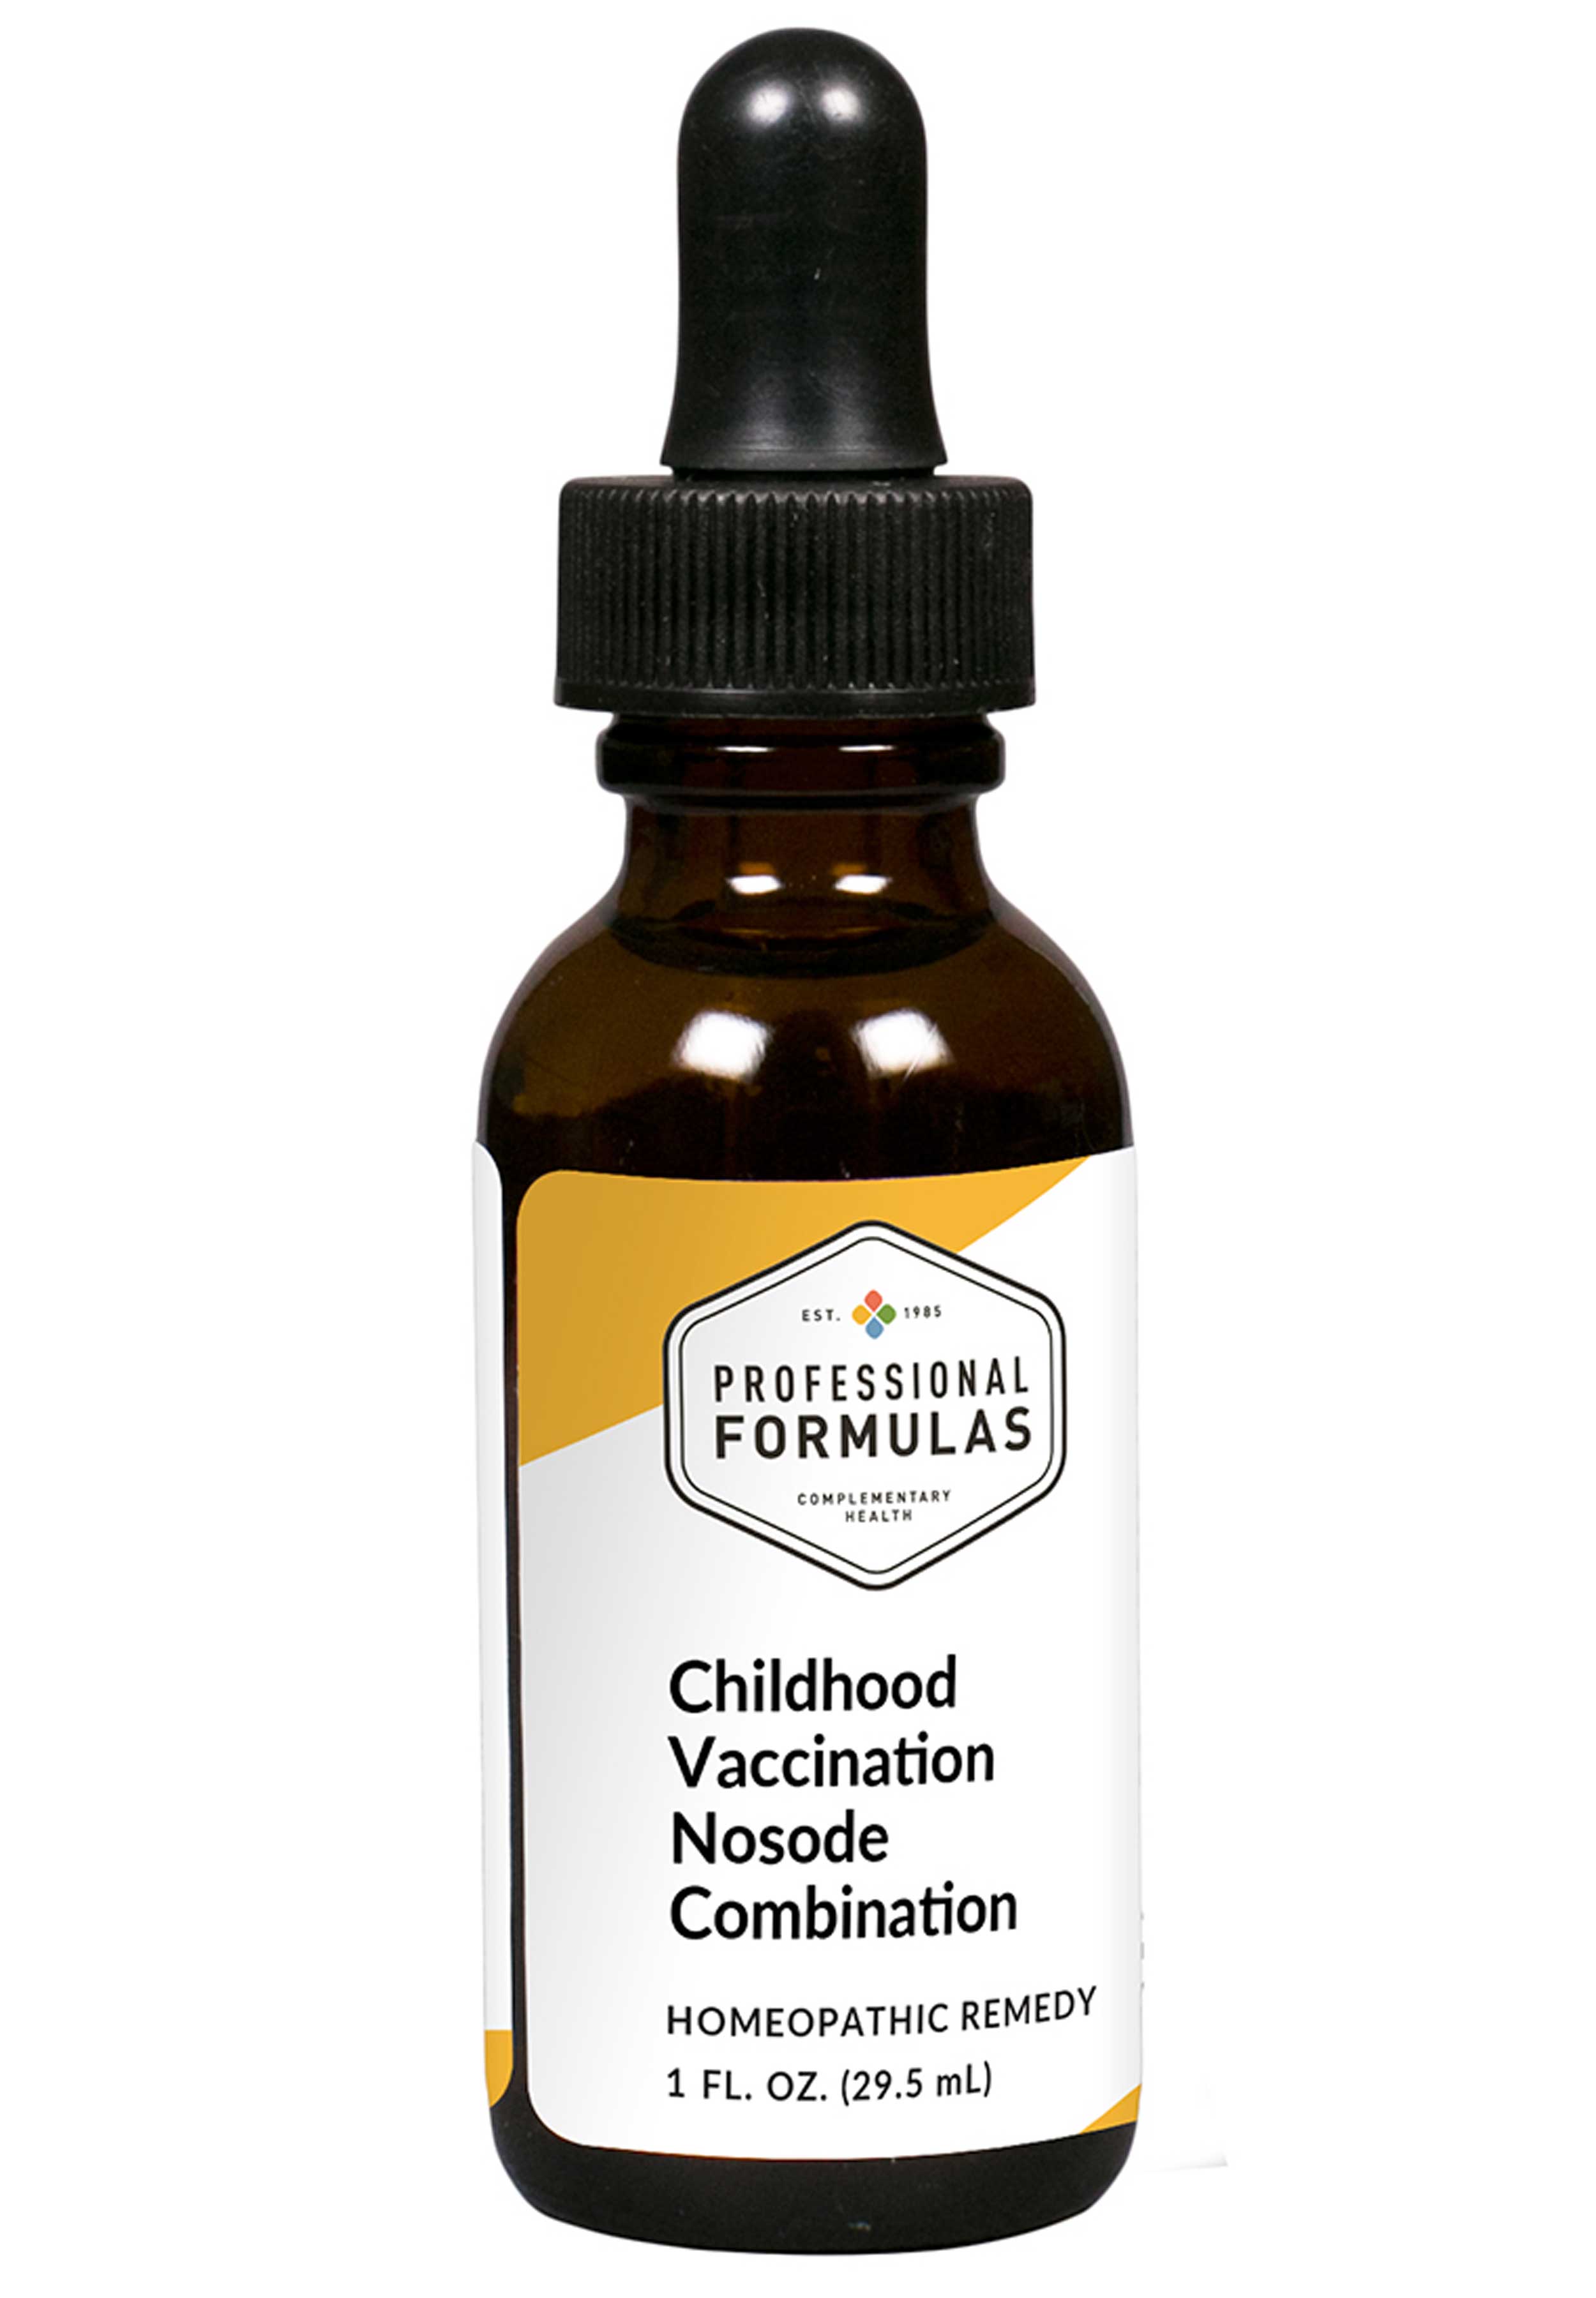 Professional Formulas Childhood Vaccination Nosode Combination